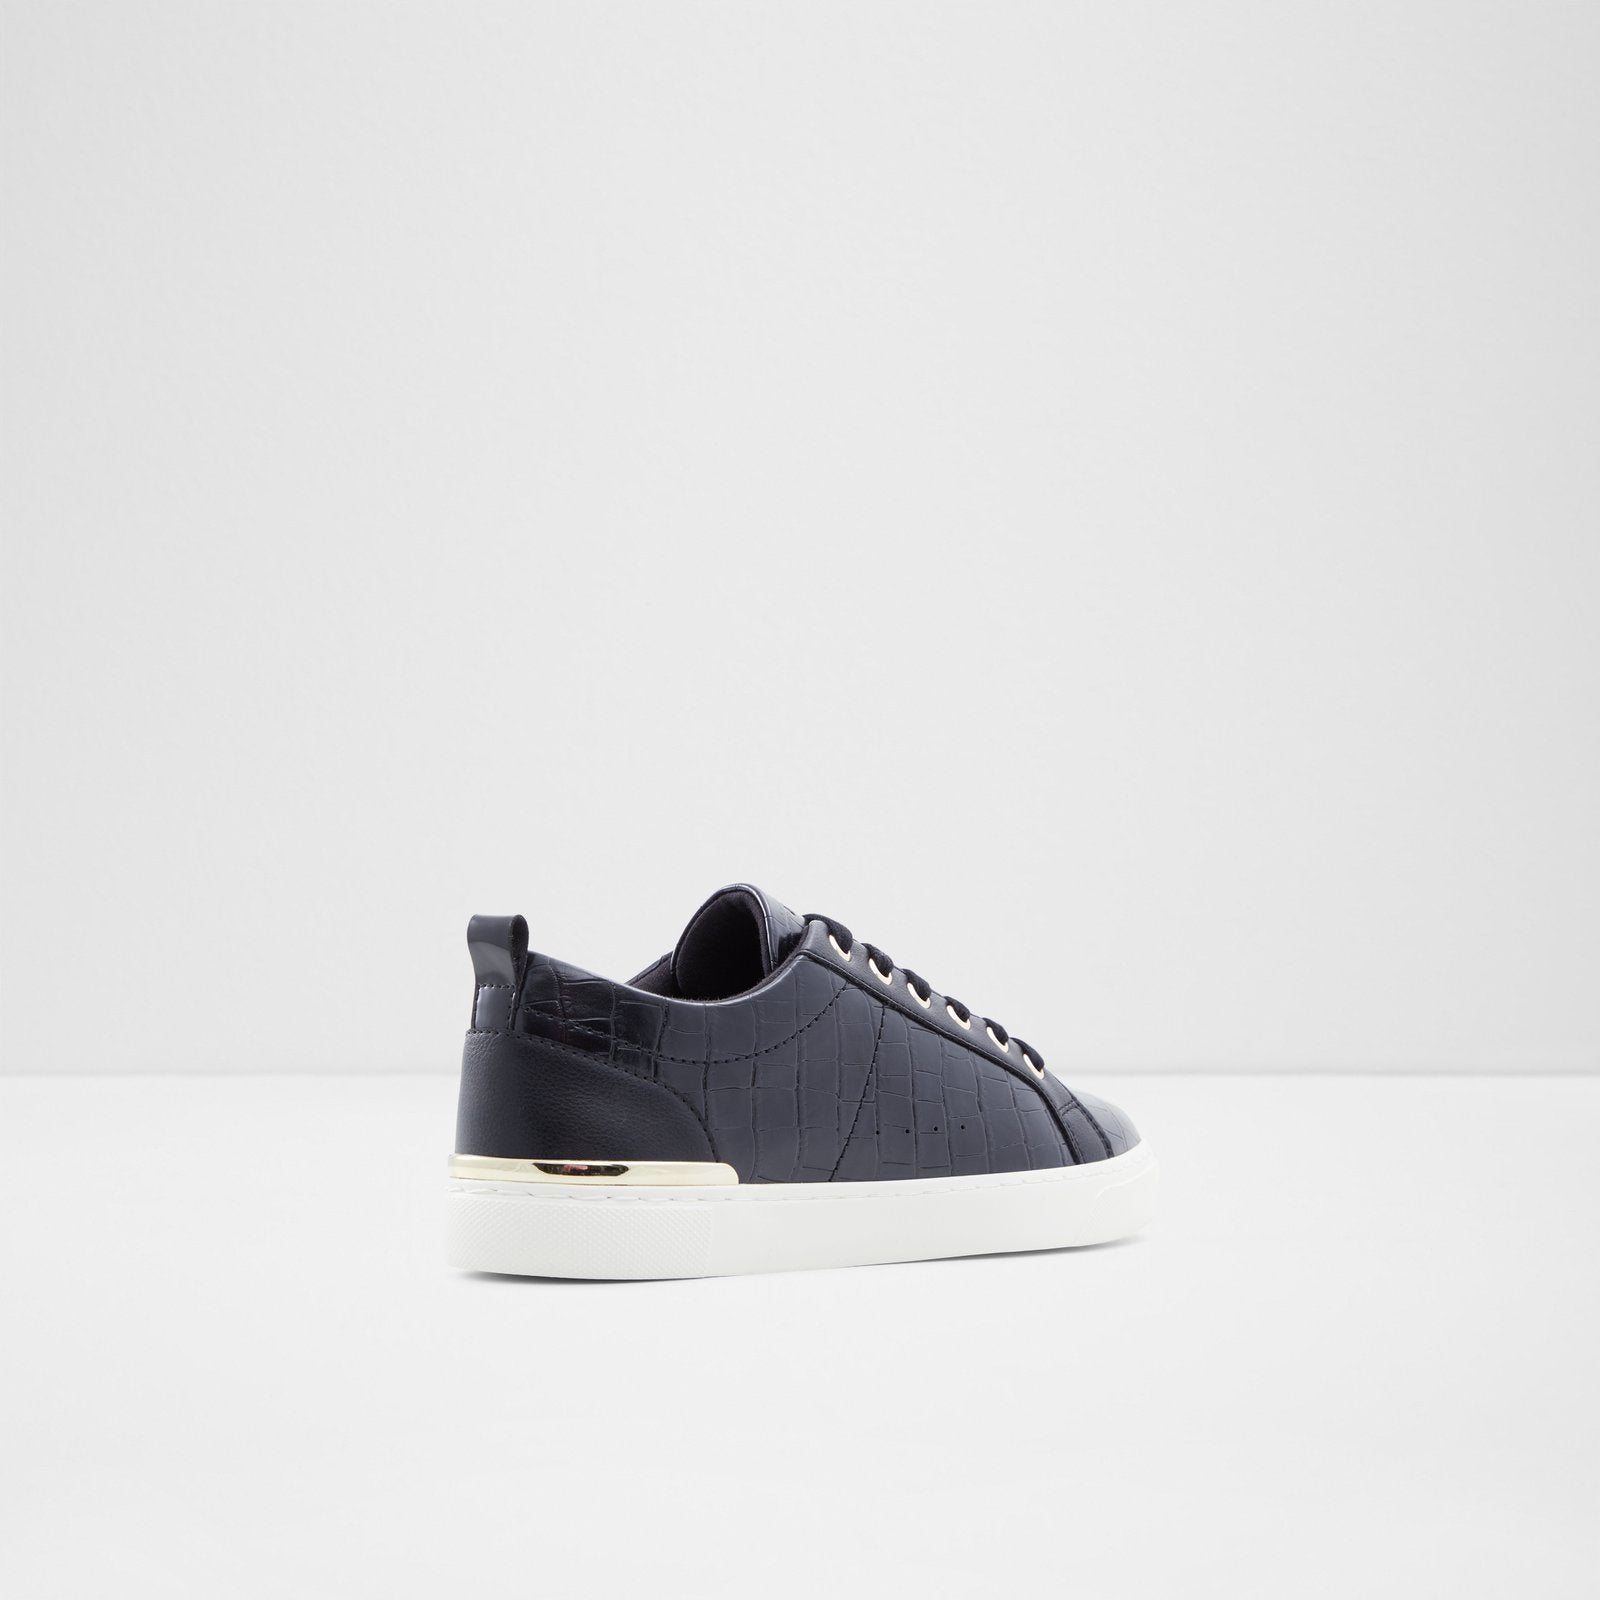 Dilathielle / Sneakers Women Shoes - Black - ALDO KSA